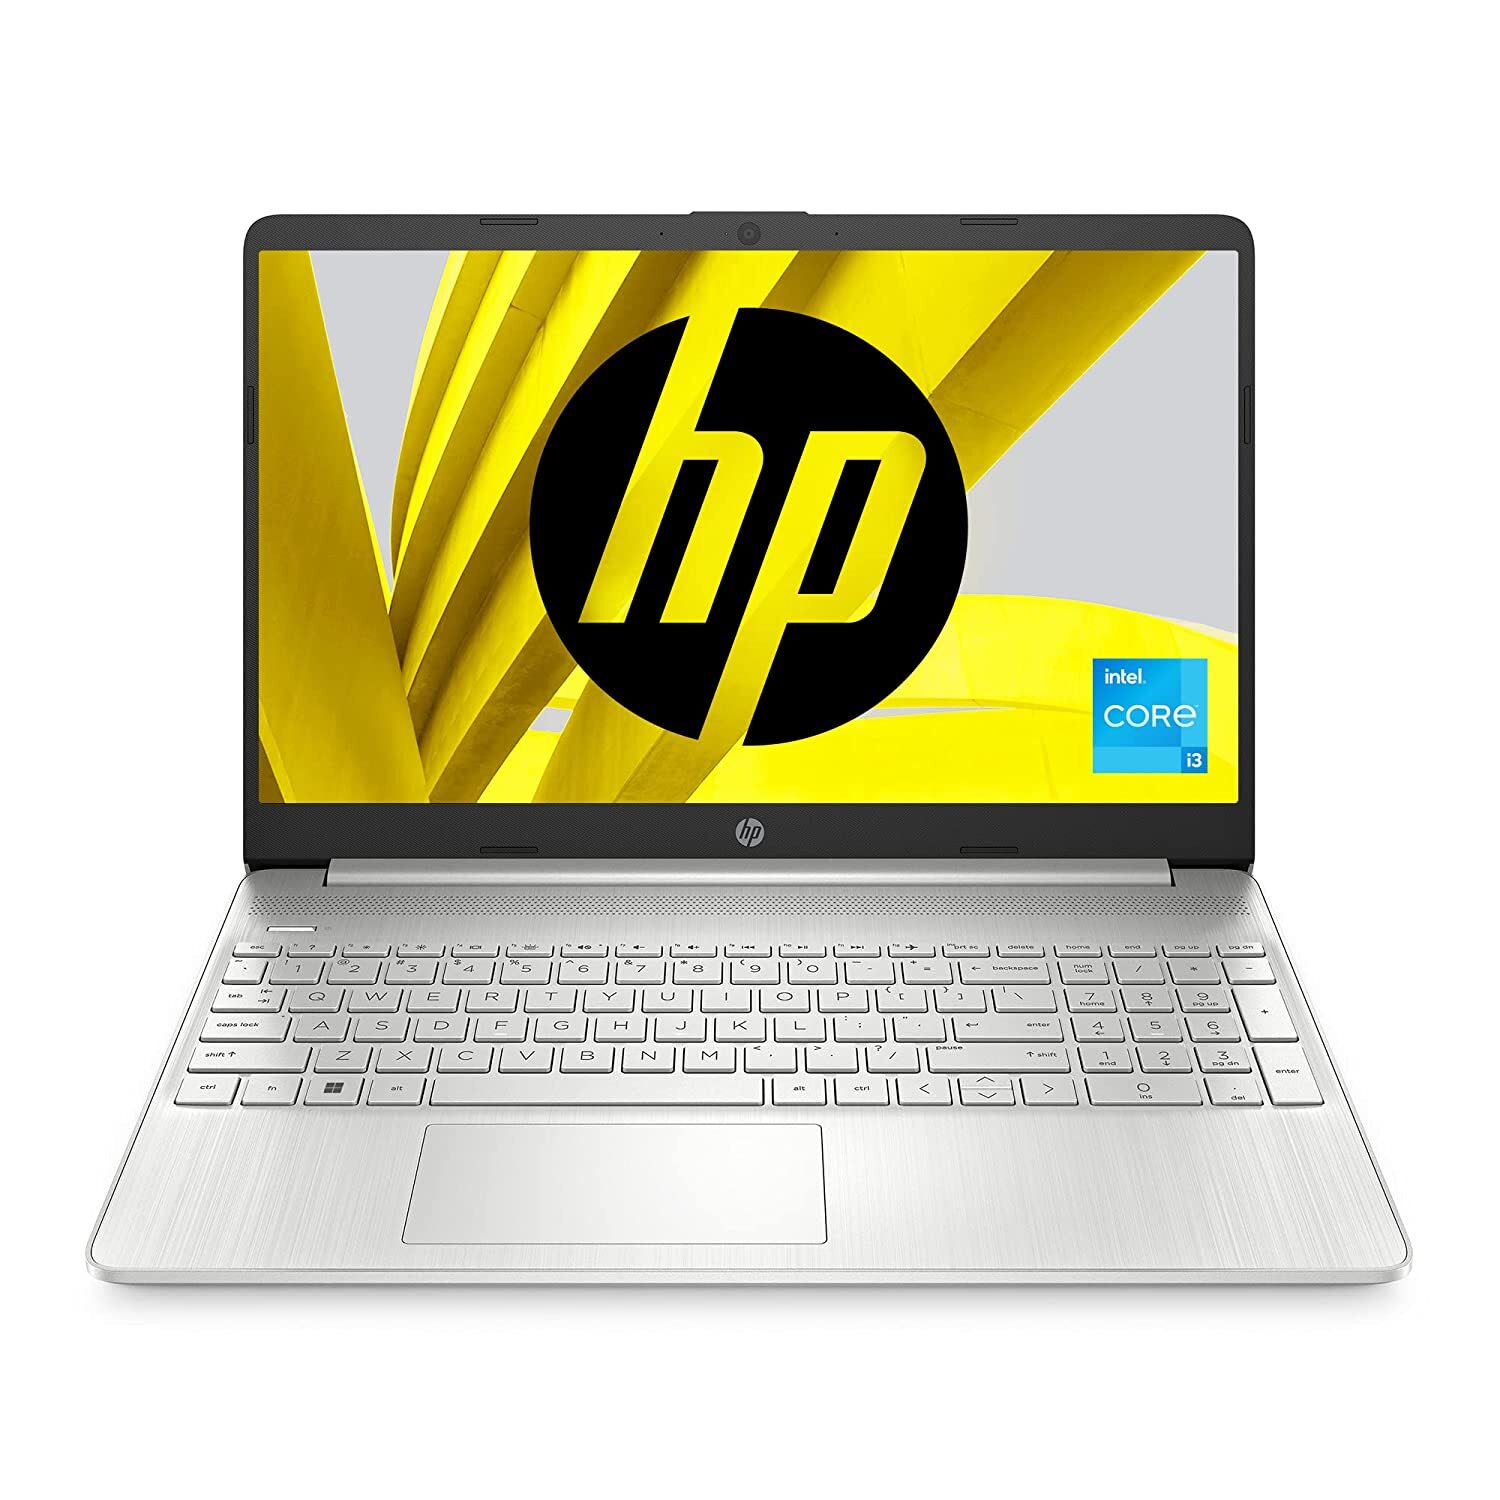 HP Laptop 15s, 11th Gen Intel Core i3-1115G4, 15.6-inch (39.6 cm), FHD, 8GB DDR4, 512GB SSD, Intel UHD Graphics, Thin & Light, Dual Speakers (Win 11, MSO 2021, Silver, 1.69 kg), fr2511TU